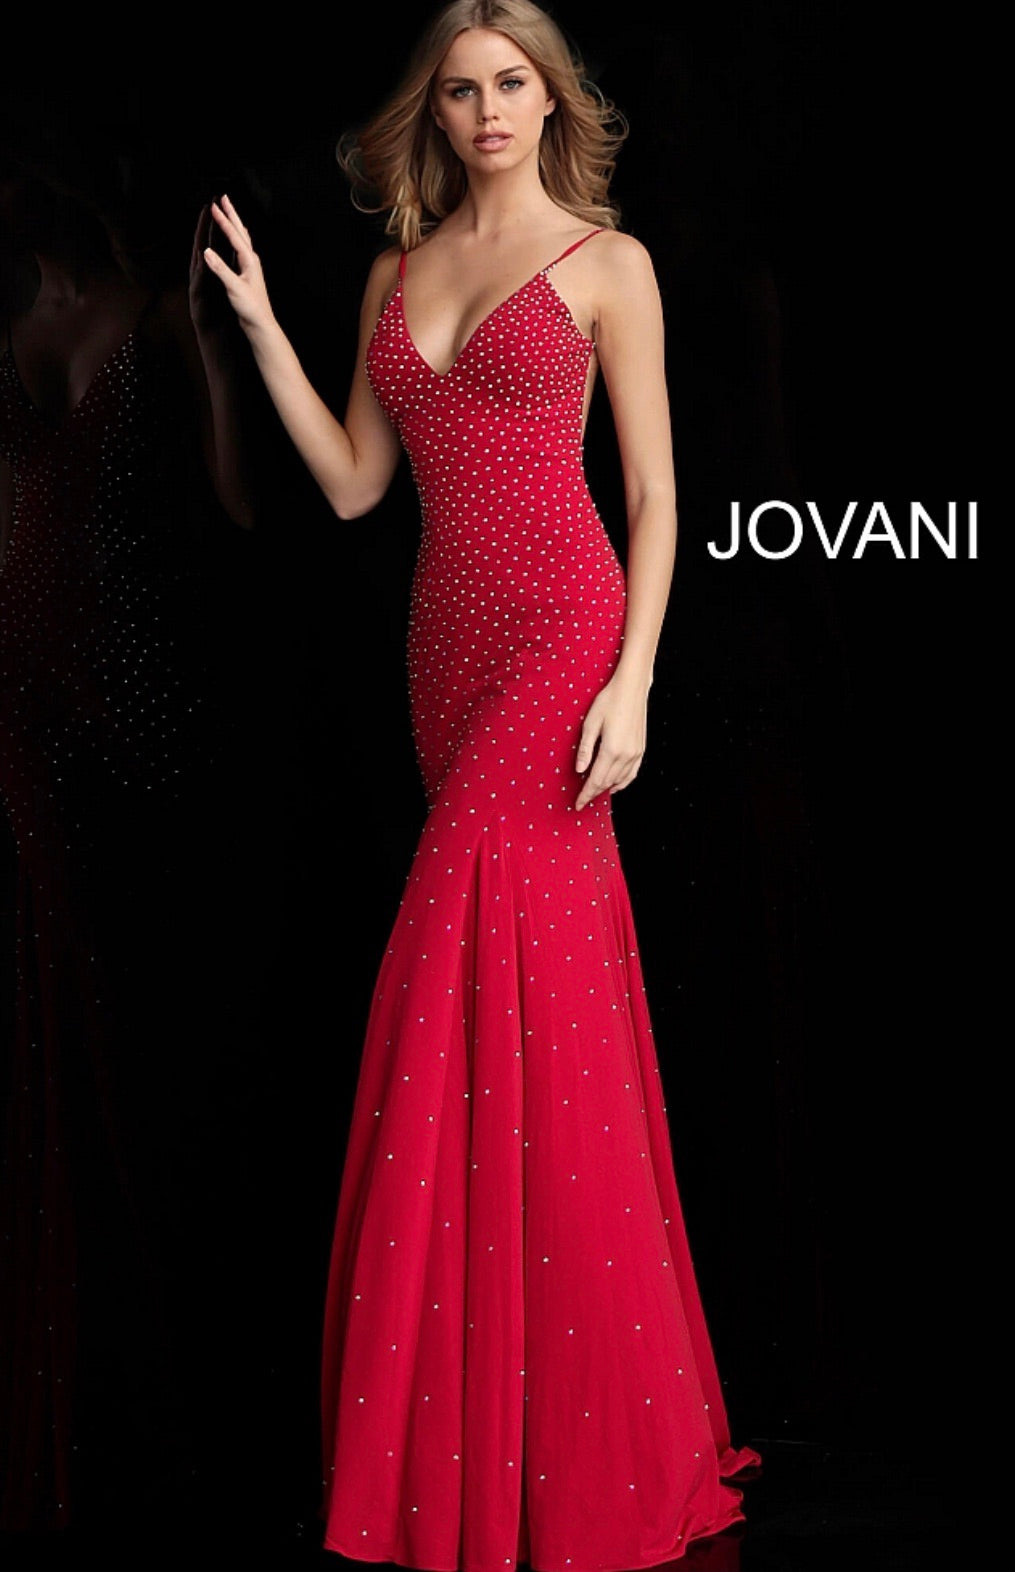 Jovani S00937 Beaded Satin Deep Plunging Neck Couture Dress